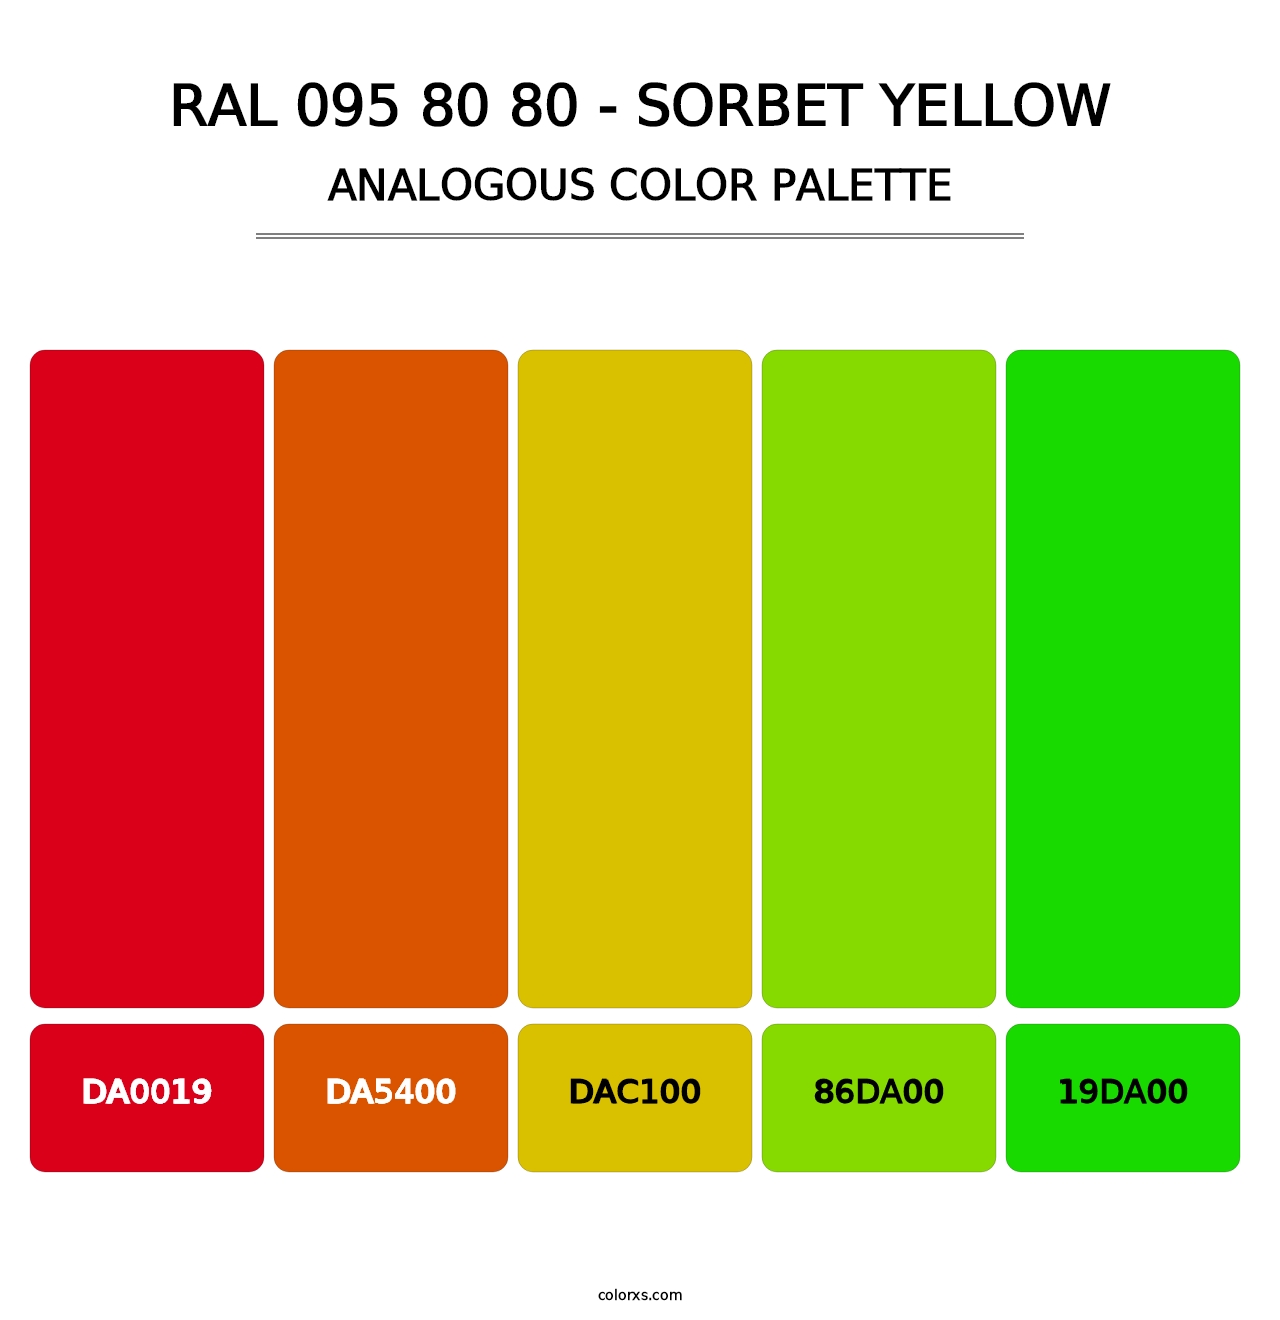 RAL 095 80 80 - Sorbet Yellow - Analogous Color Palette